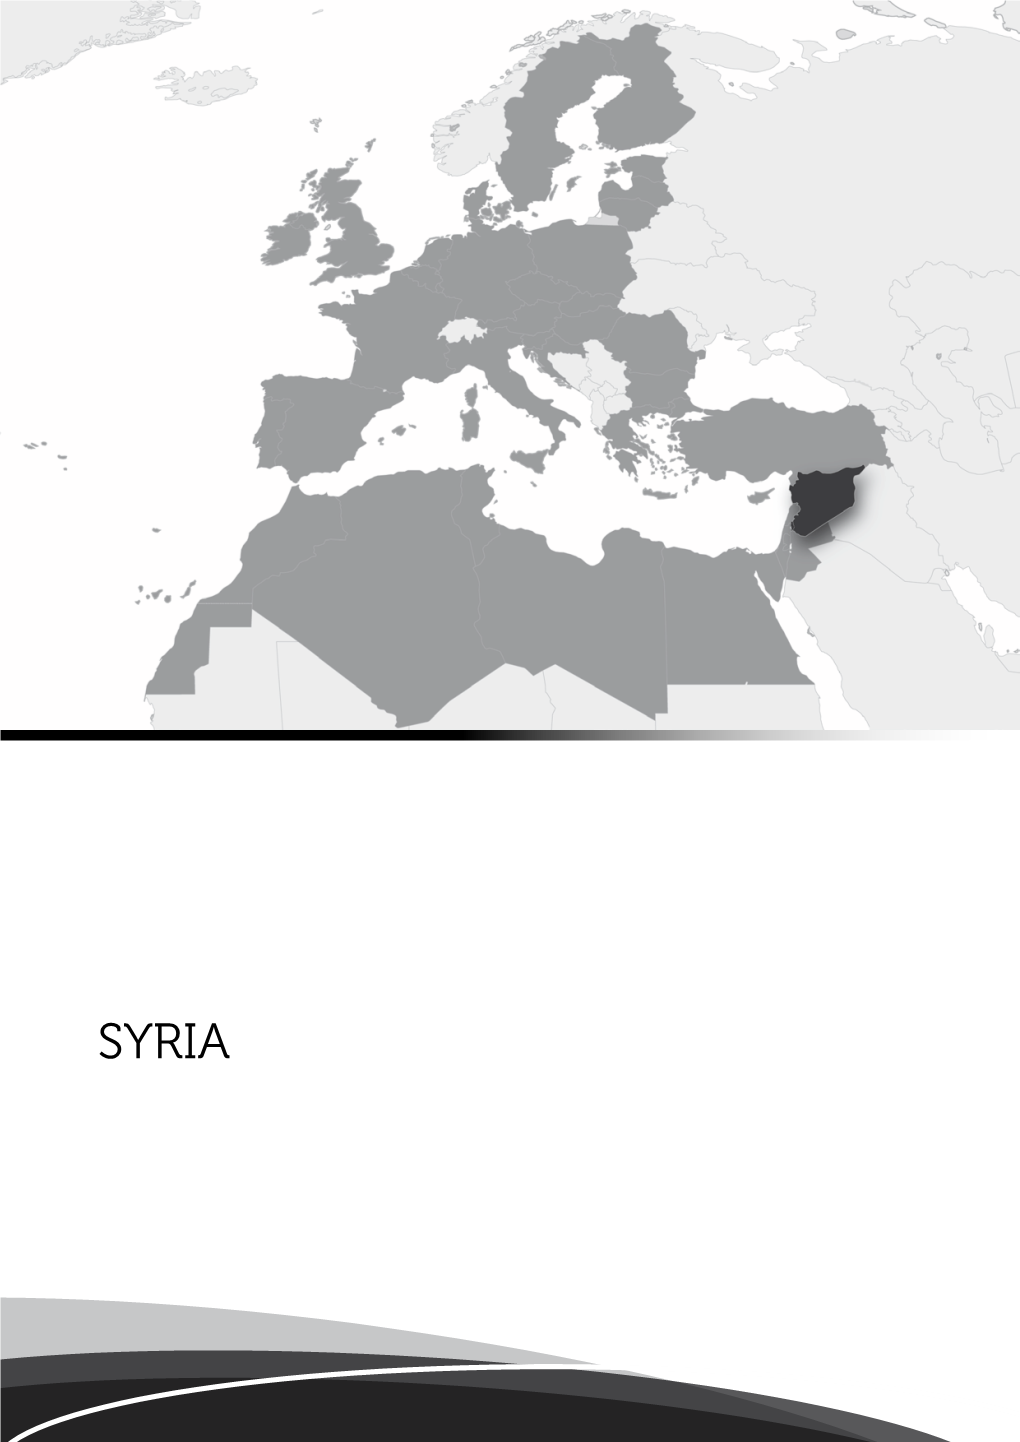 Syria Presentation